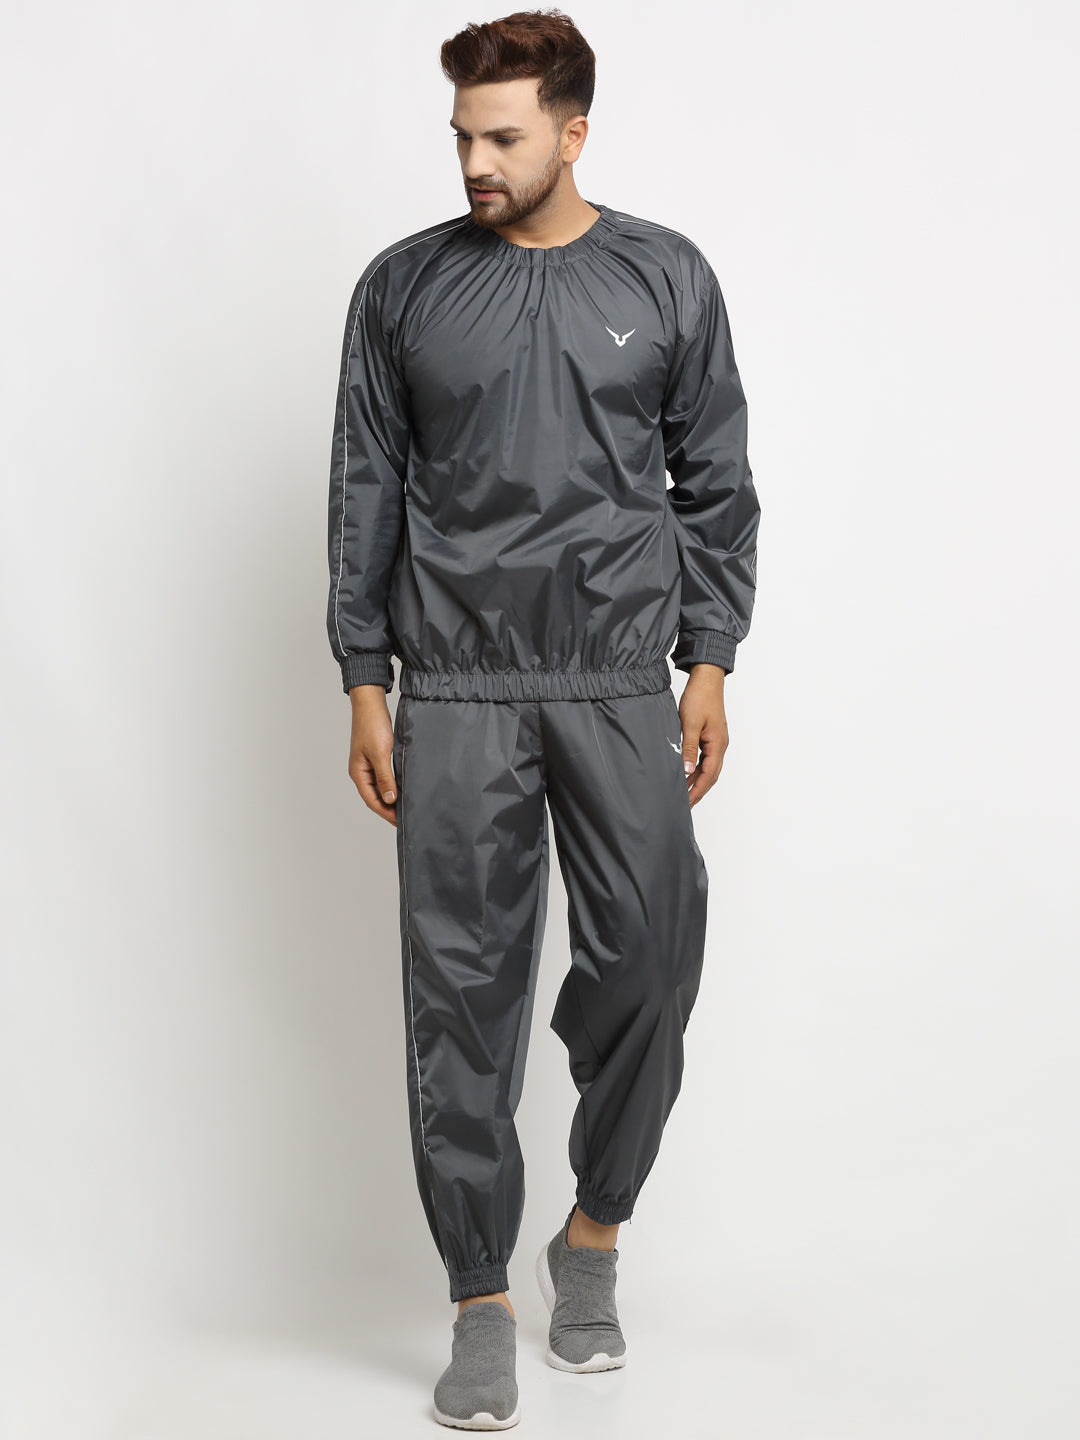 NINGMI Sauna Suit for Men Sweat Jacket Long Sleeve India